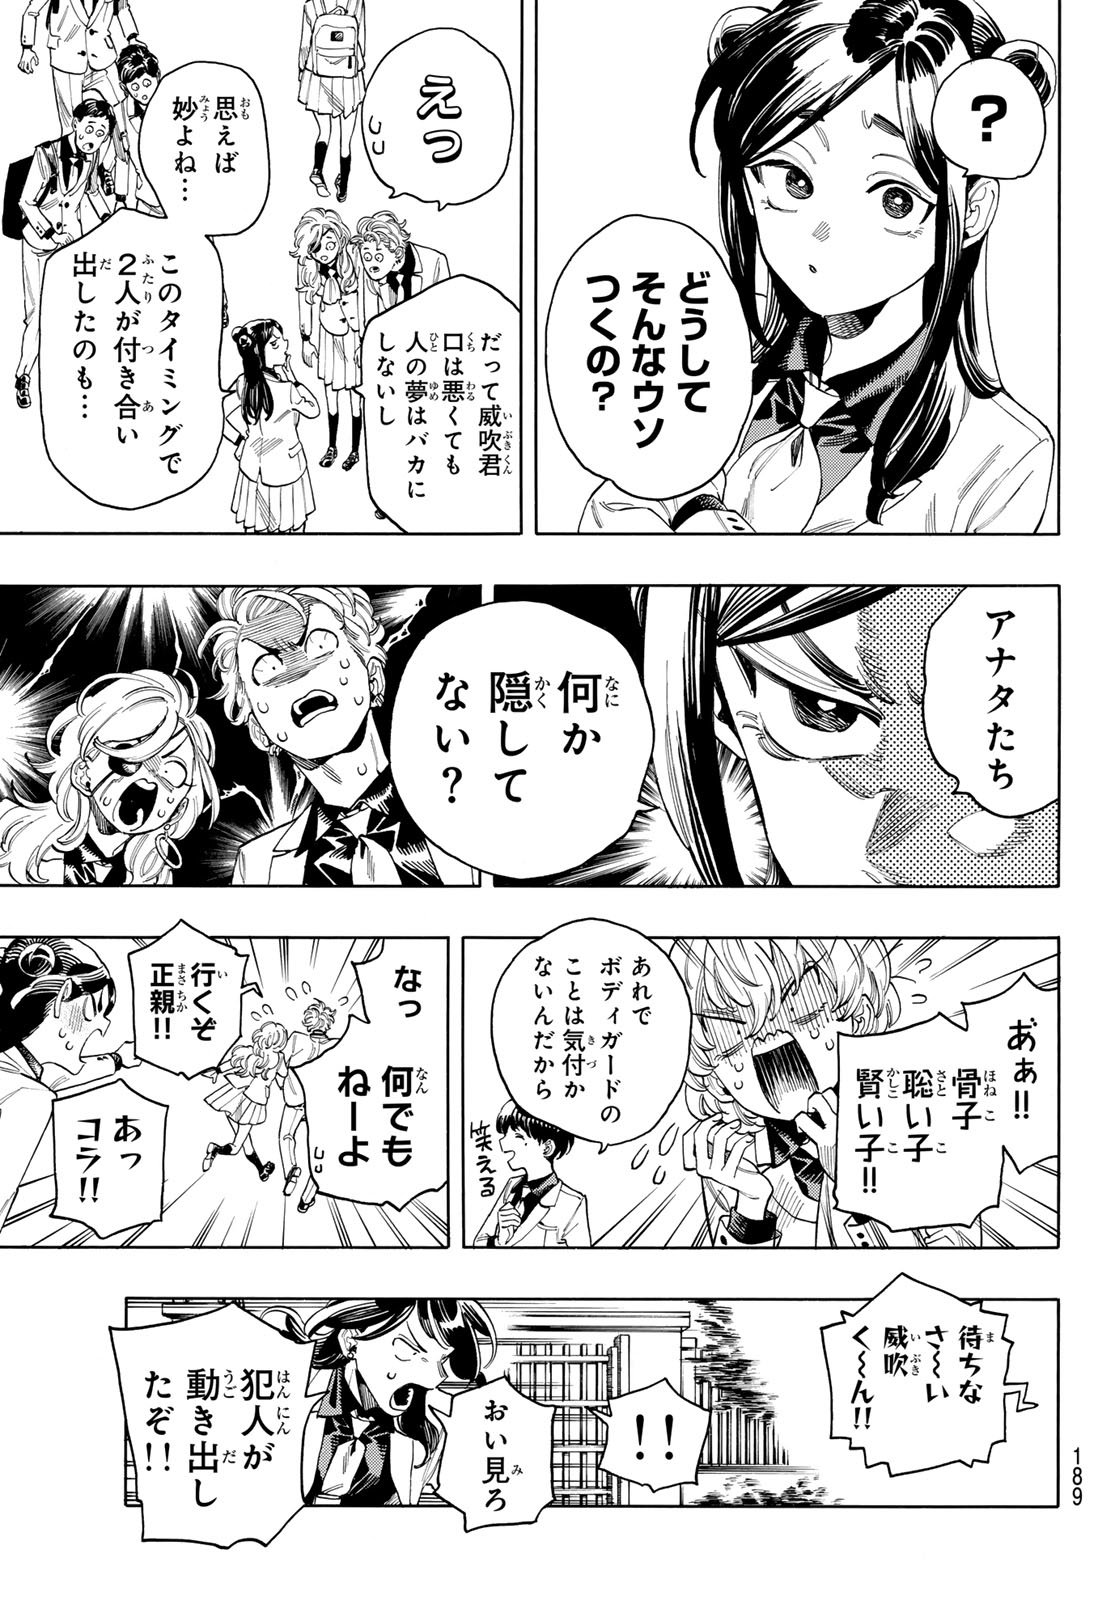 Akabane Honeko no Bodyguard - Chapter 78 - Page 11